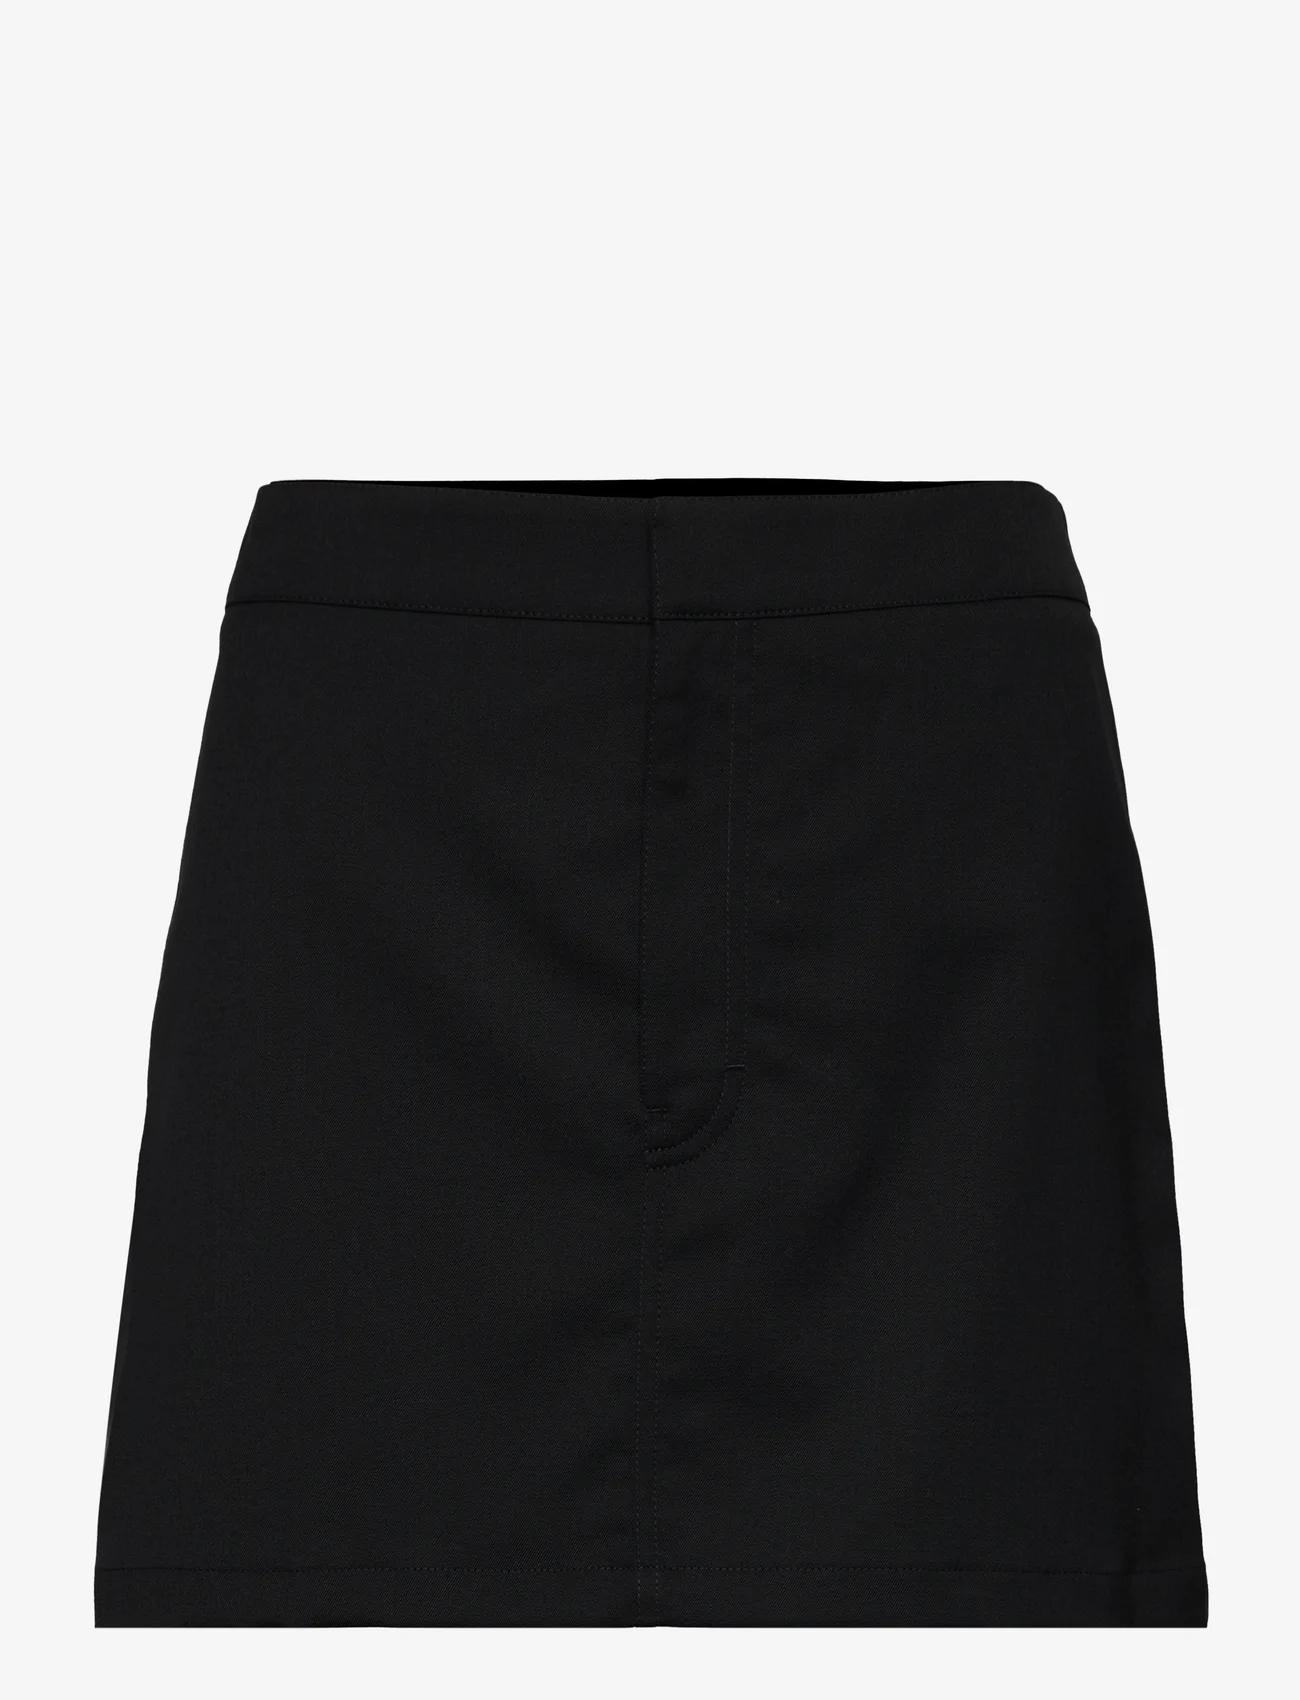 Filippa K - Short Tailored Skirt - korta kjolar - black - 0